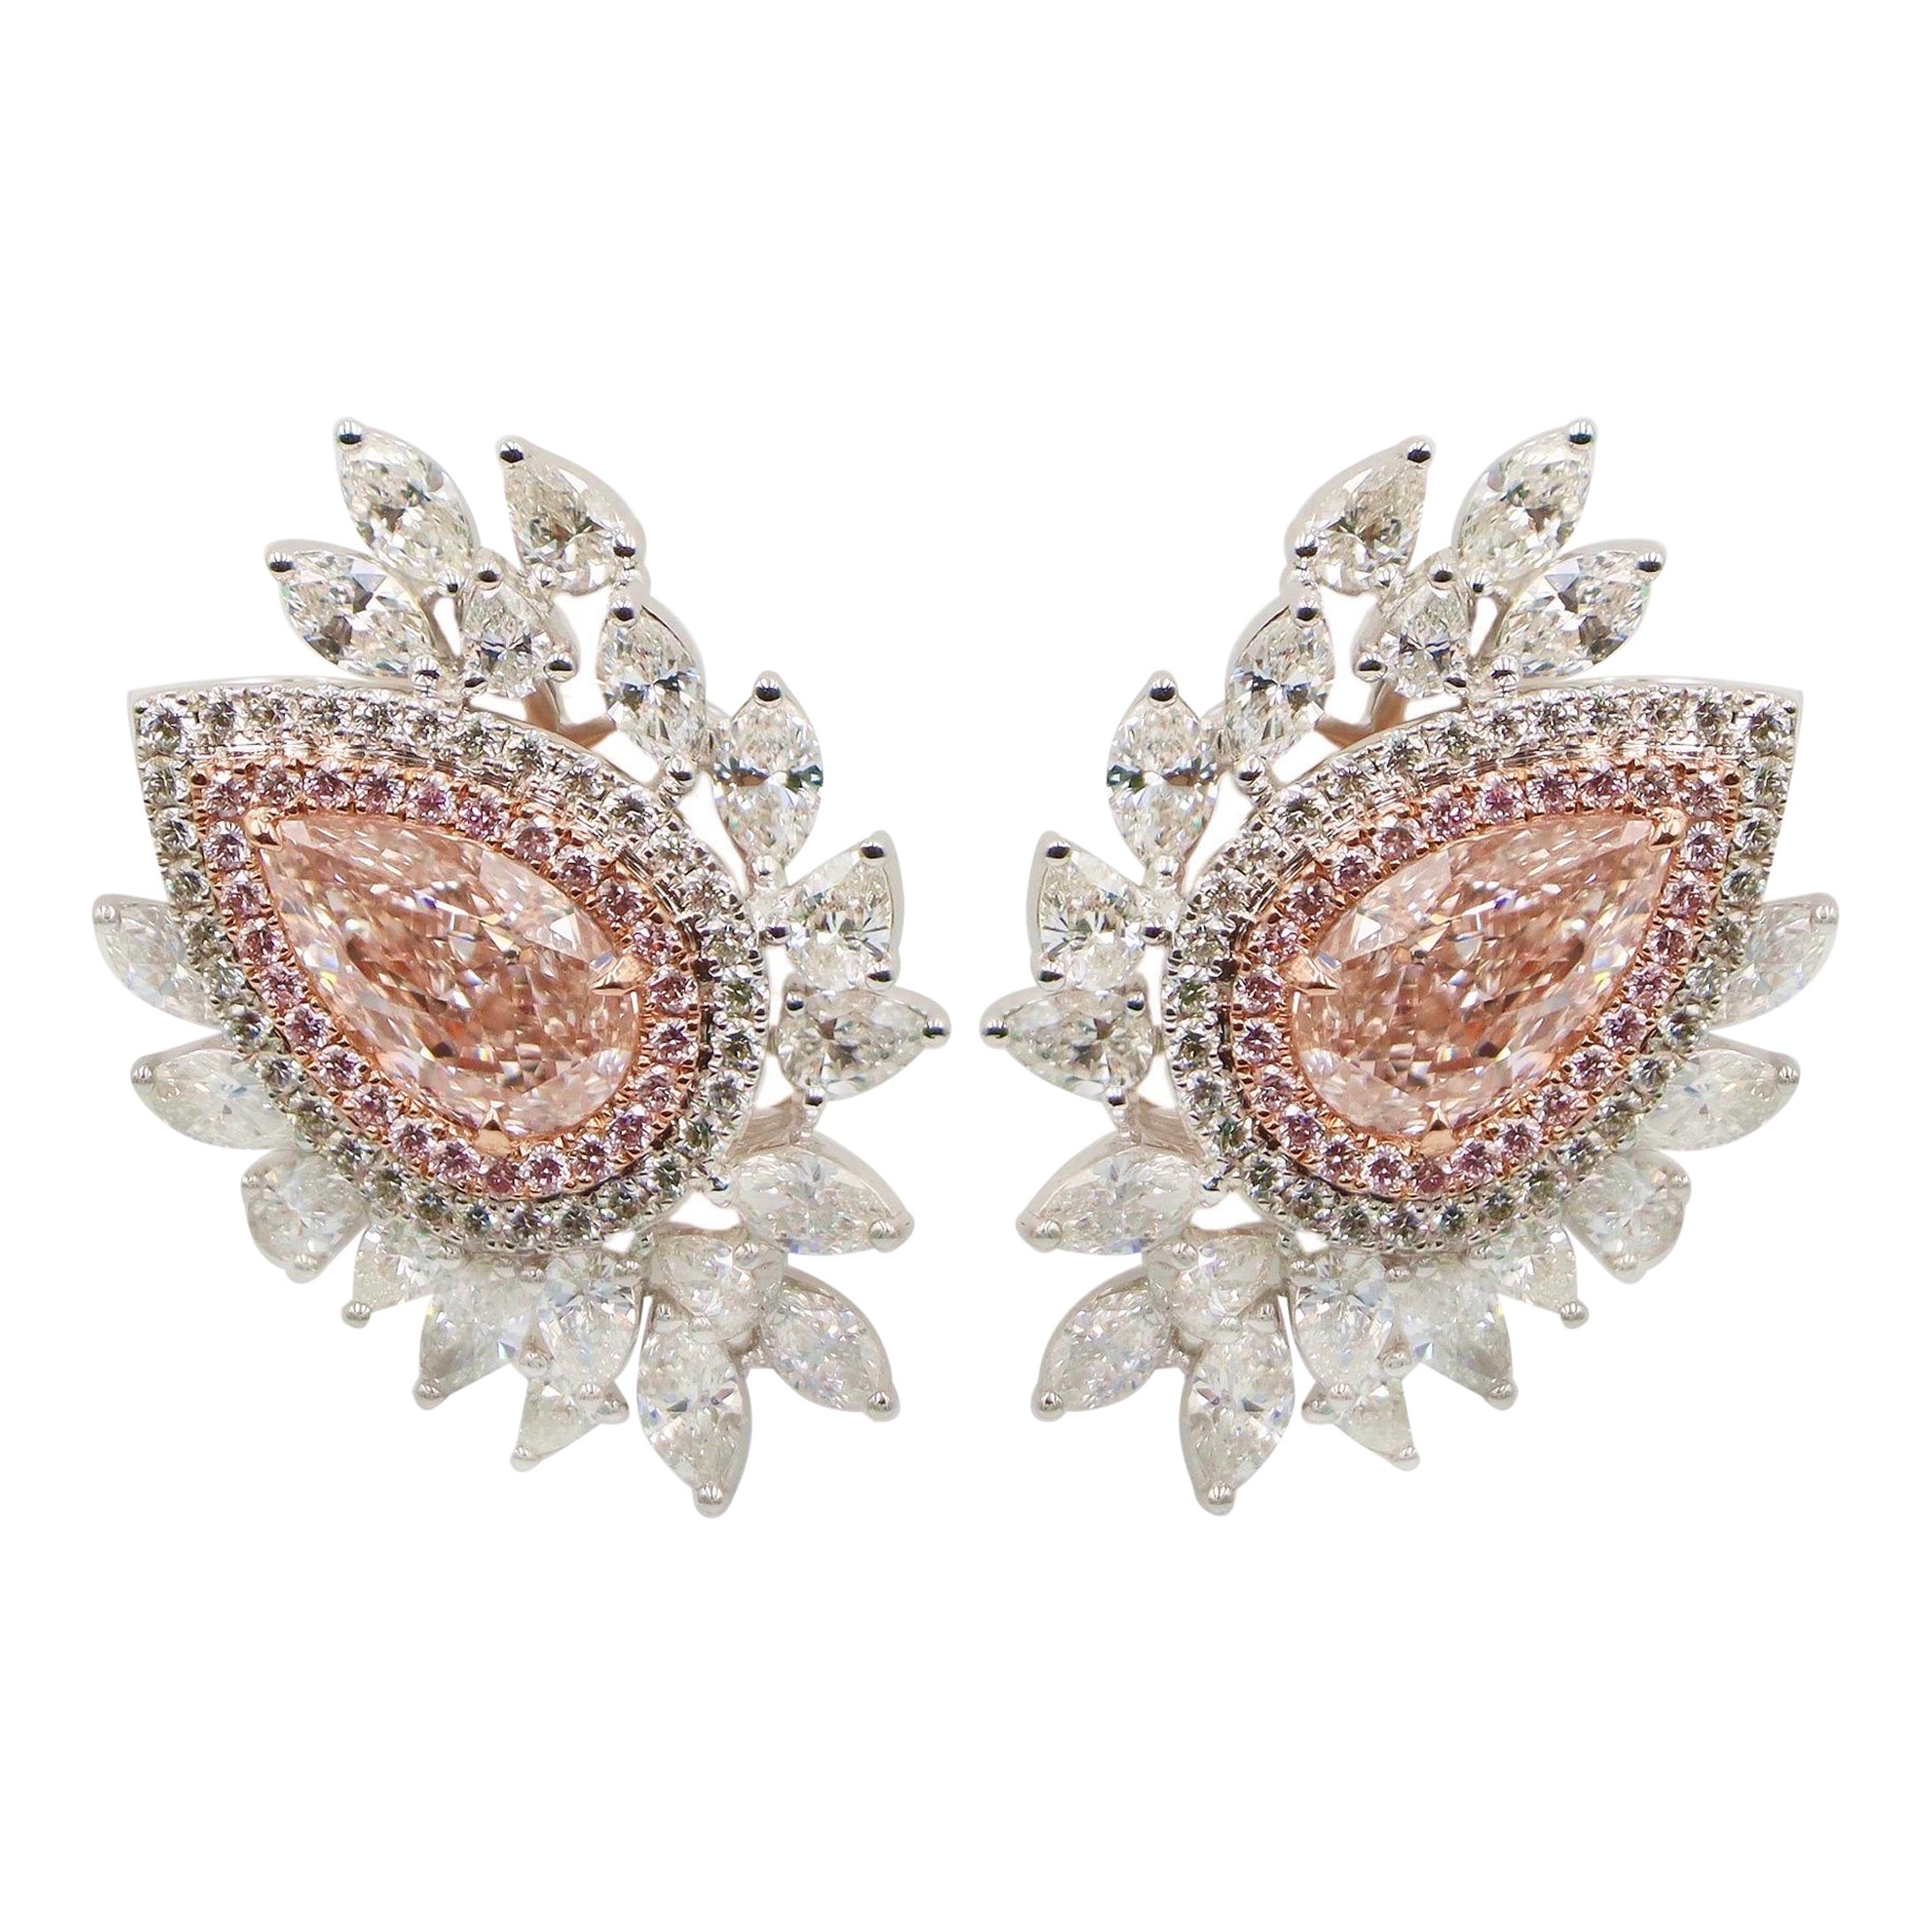 Emilio Jewelry Gia Certified 3.75 Carat Very Light Pink Diamond Earrings 